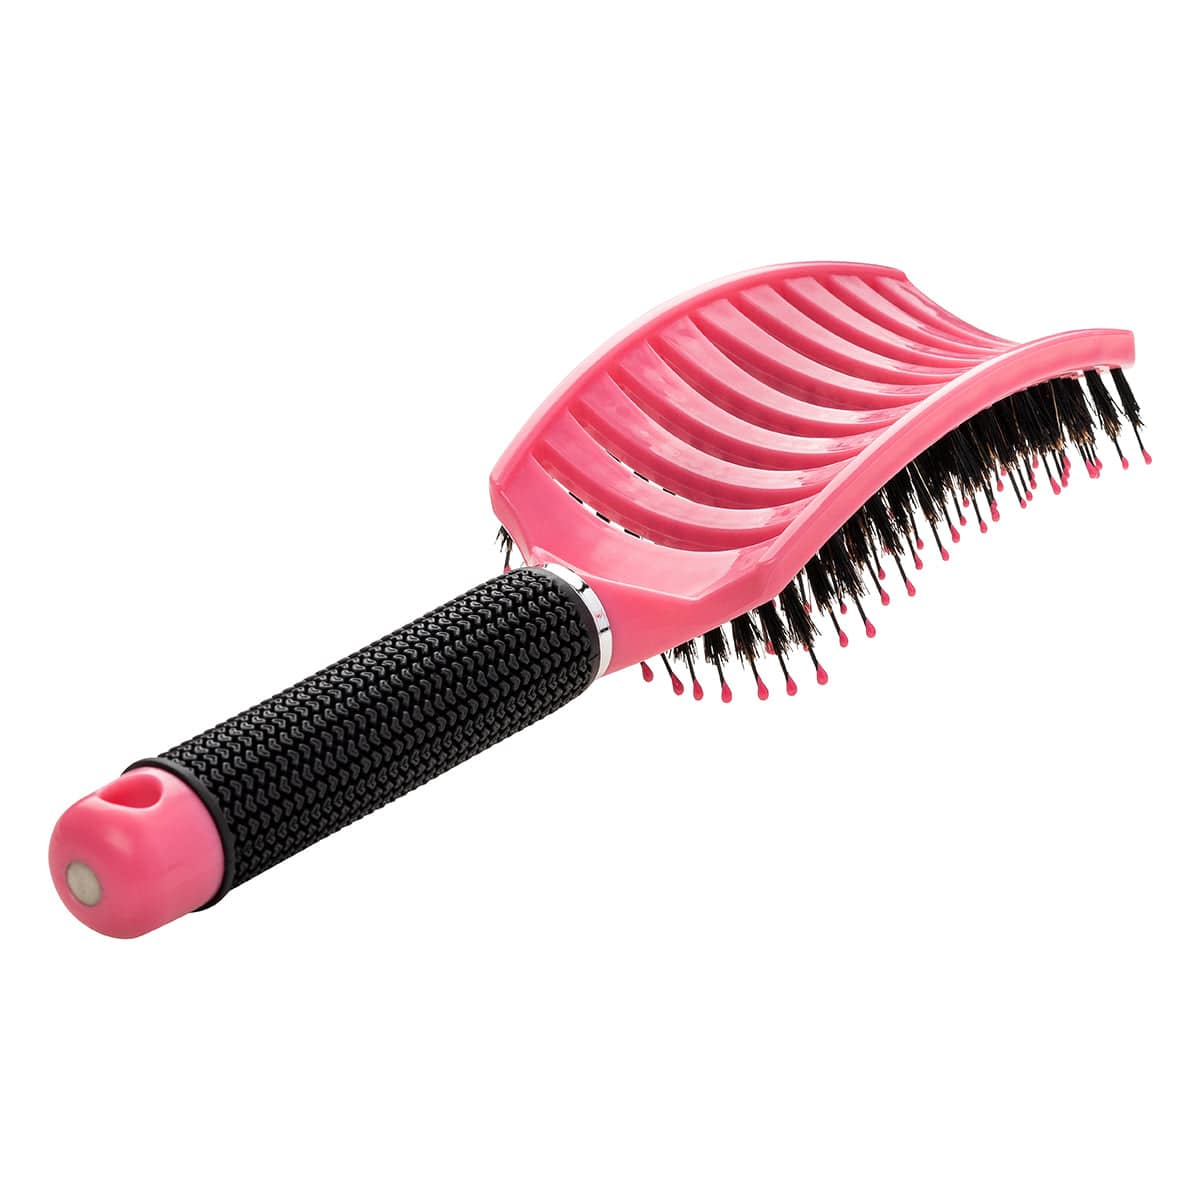 The Sensory Happy Hairbrush- Pink